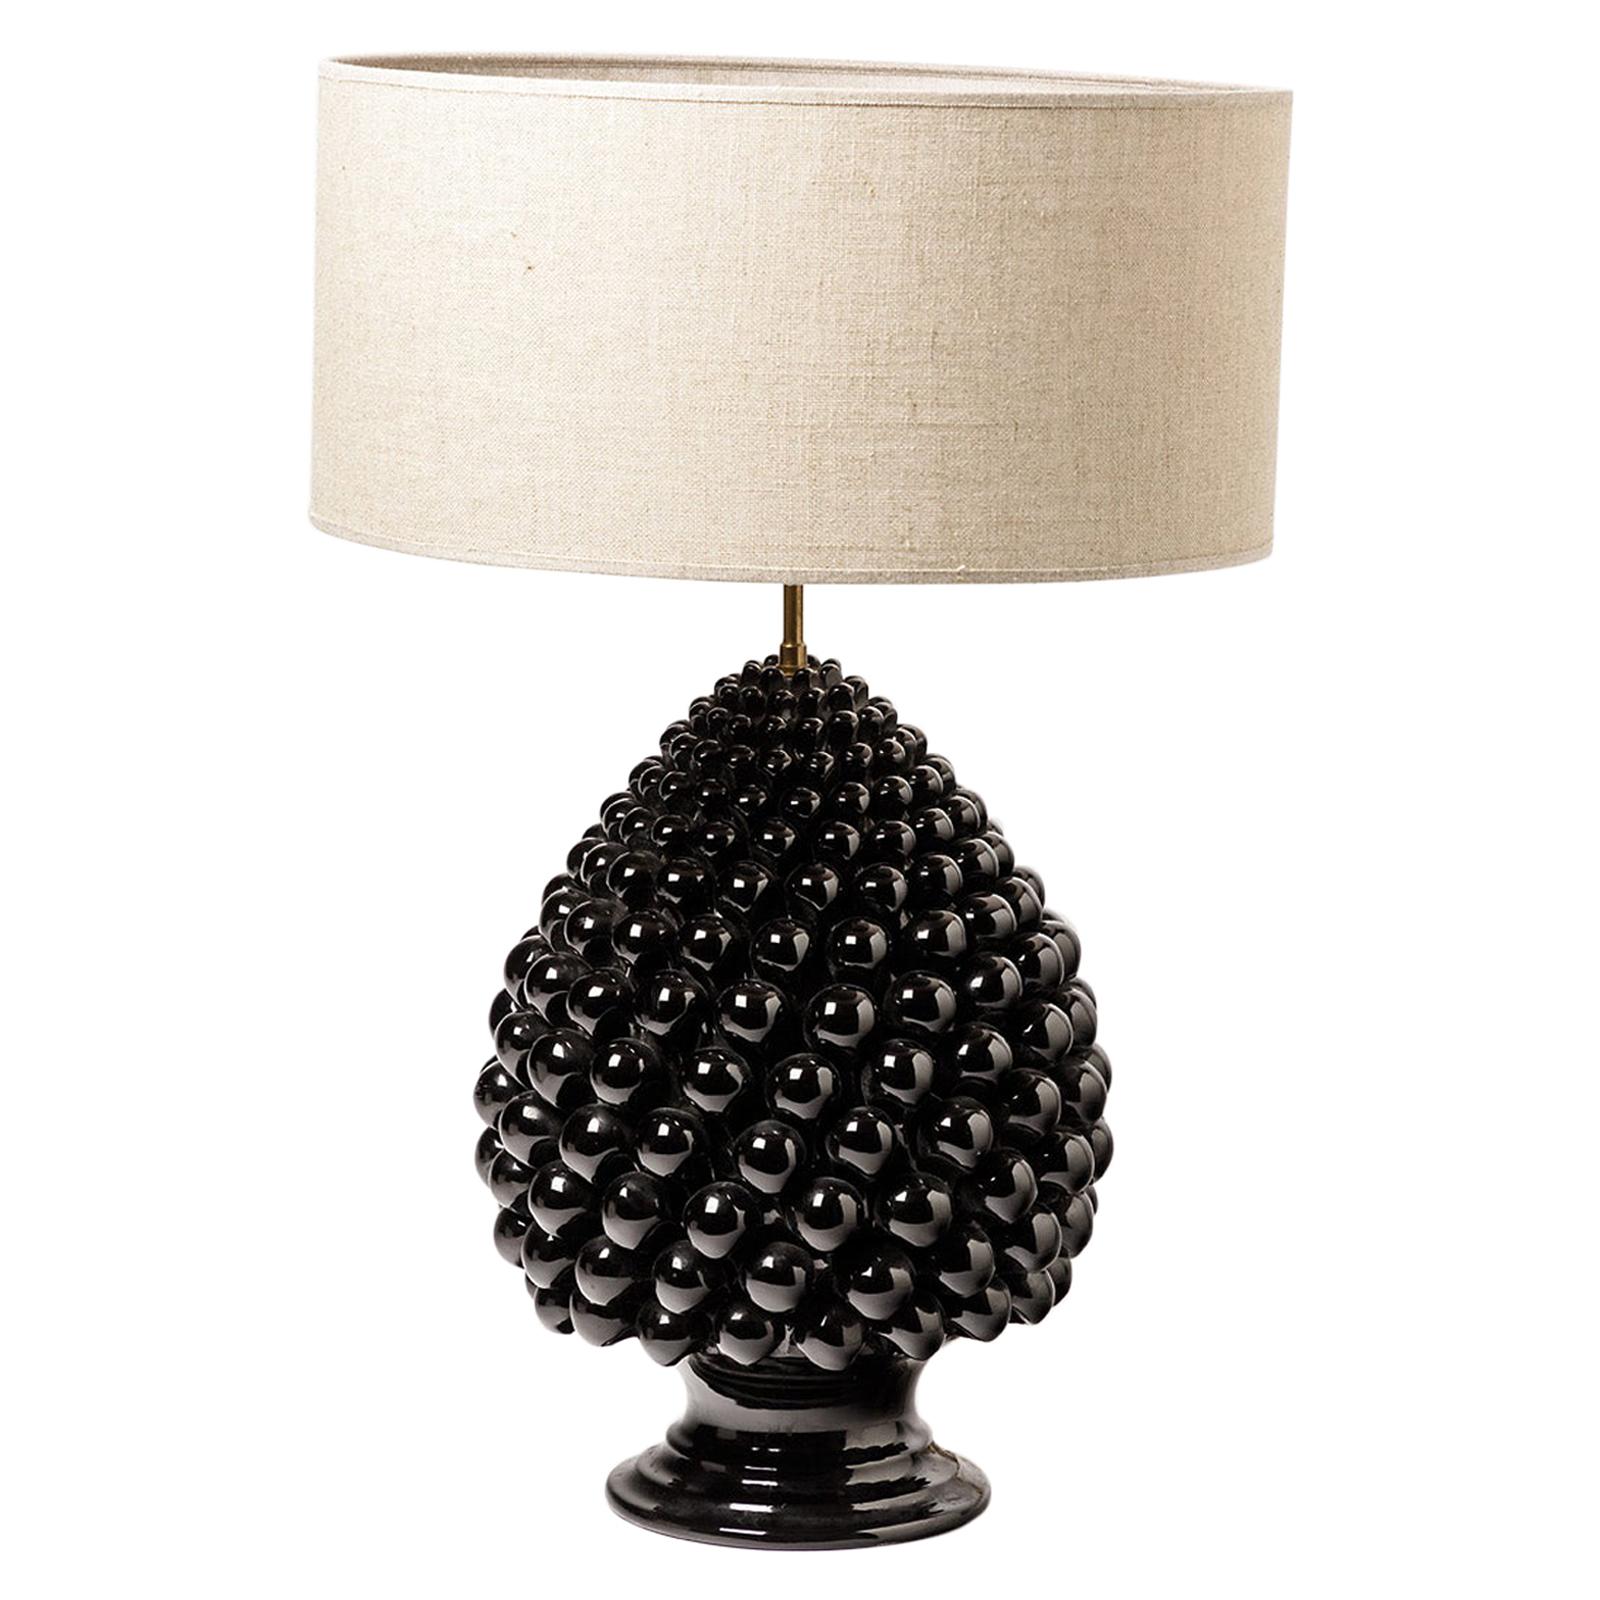 2àth Midcentury Italian Black Design Table Lamp Decorative Pine Apple